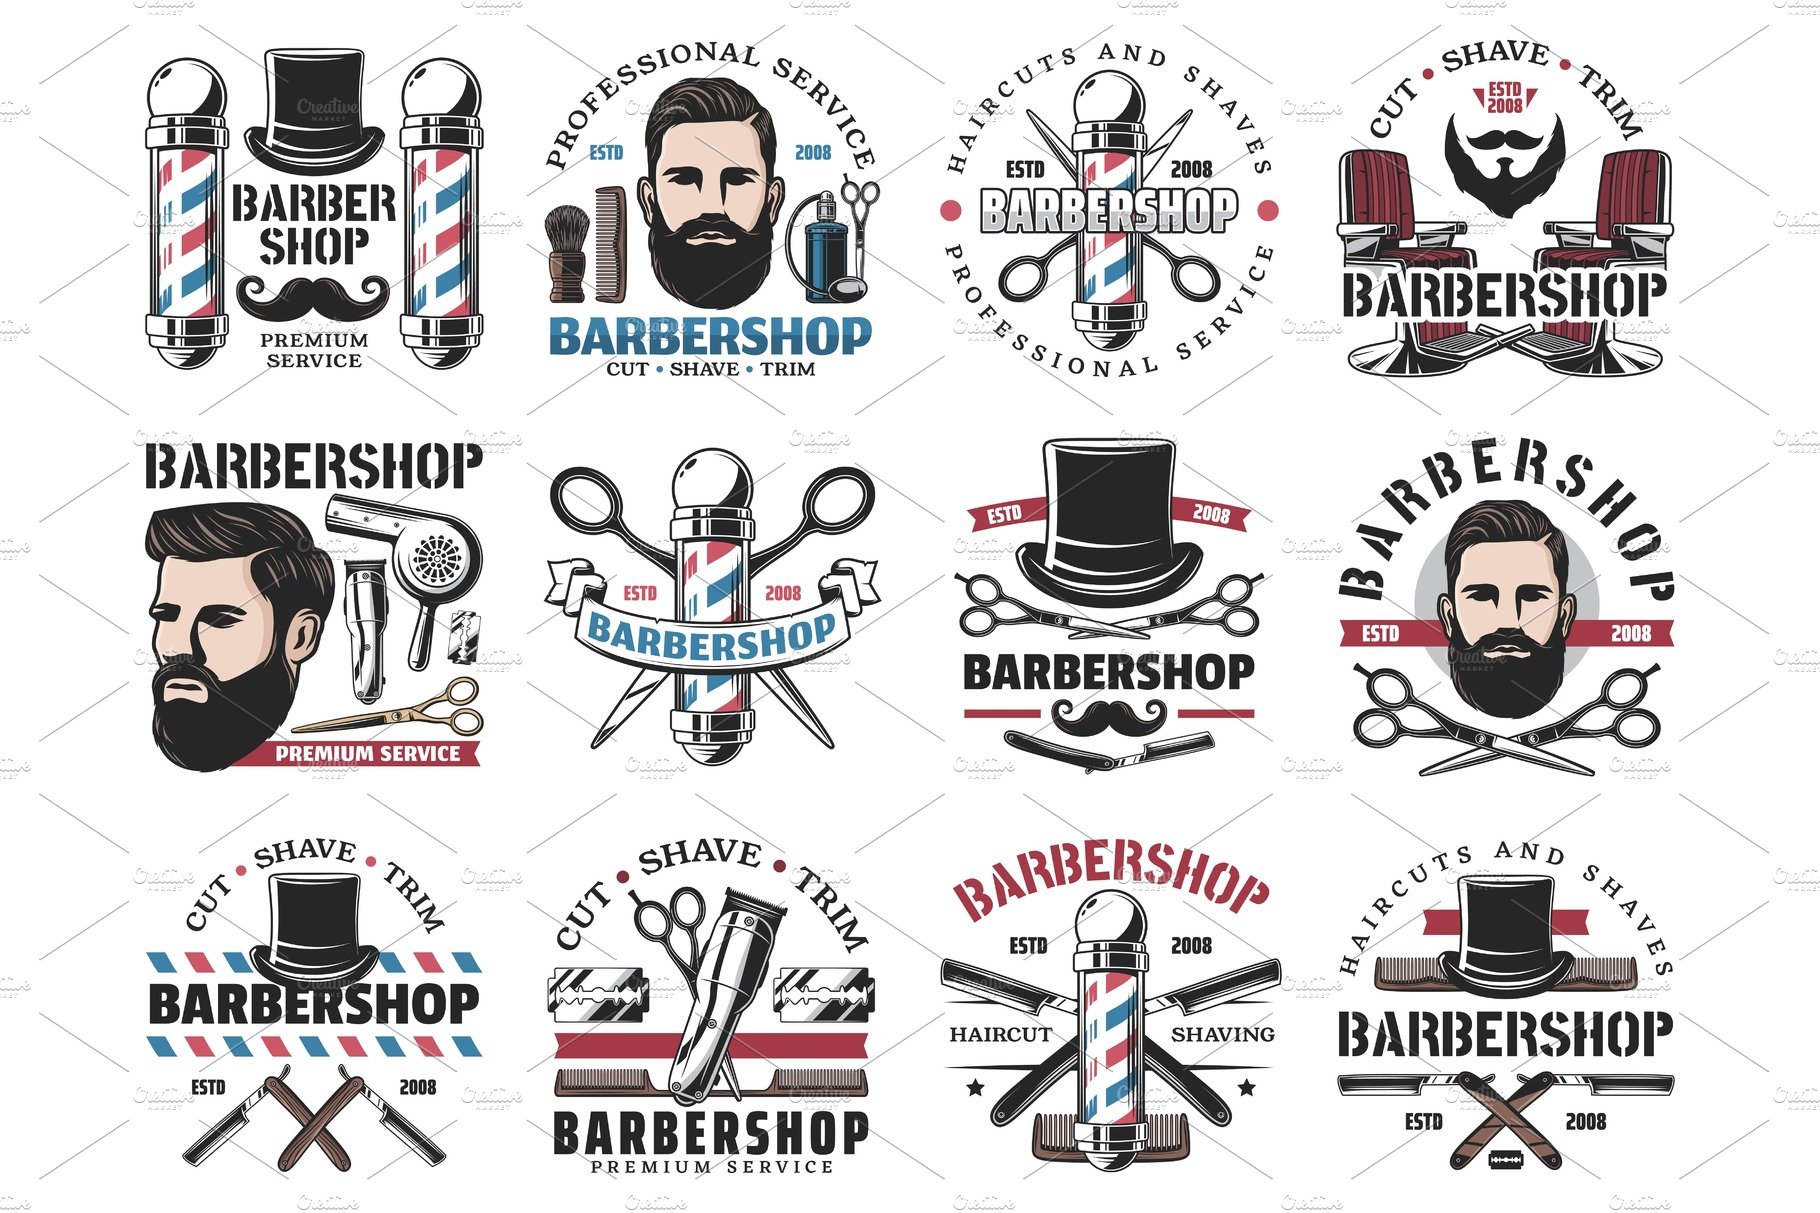 Barbershop icons, beard shaving cover image.